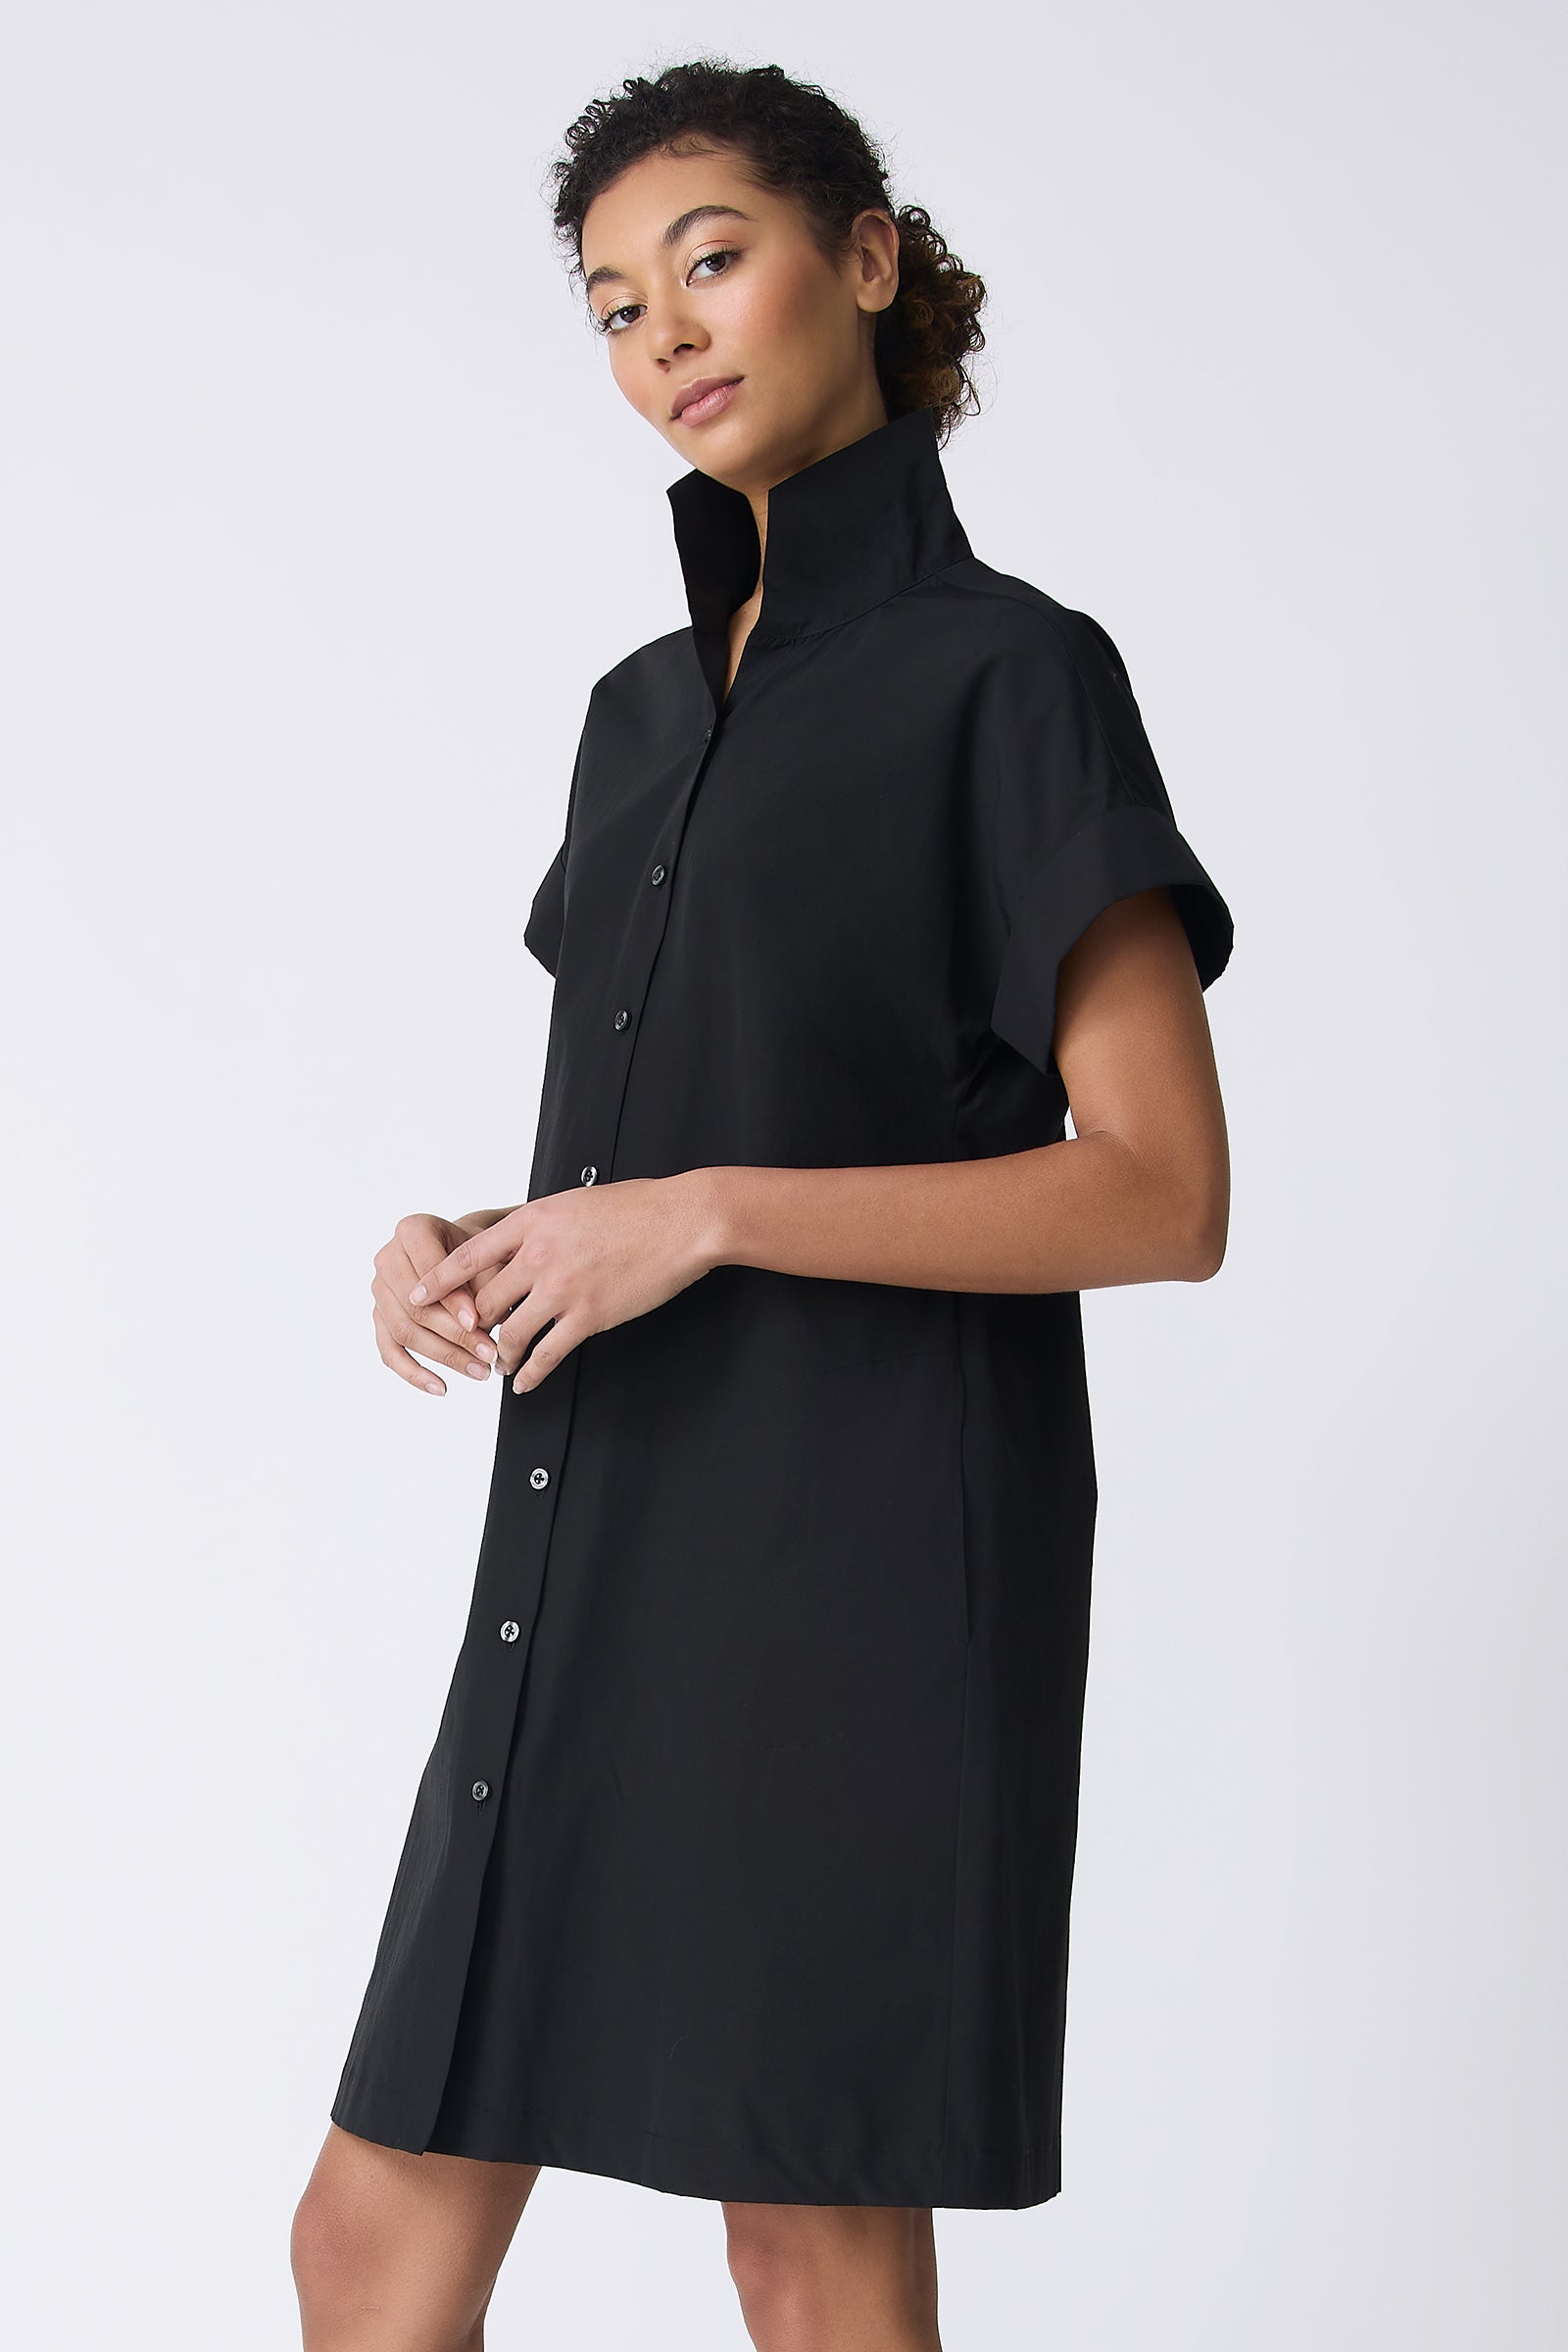 Kal Rieman Holly Kimono Dress in Black on model side view